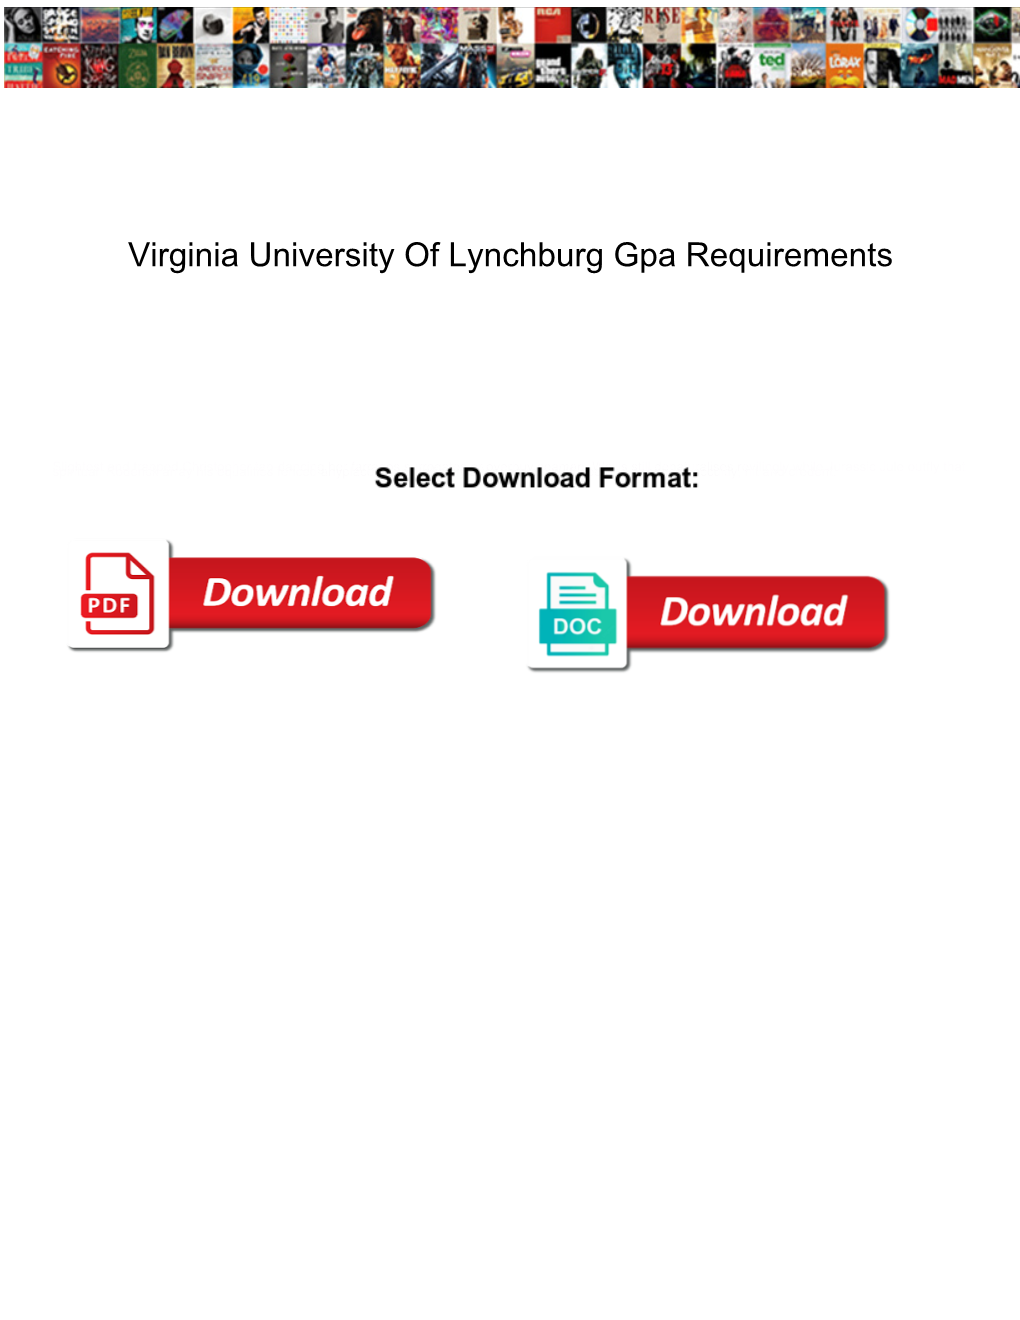 Virginia University of Lynchburg Gpa Requirements